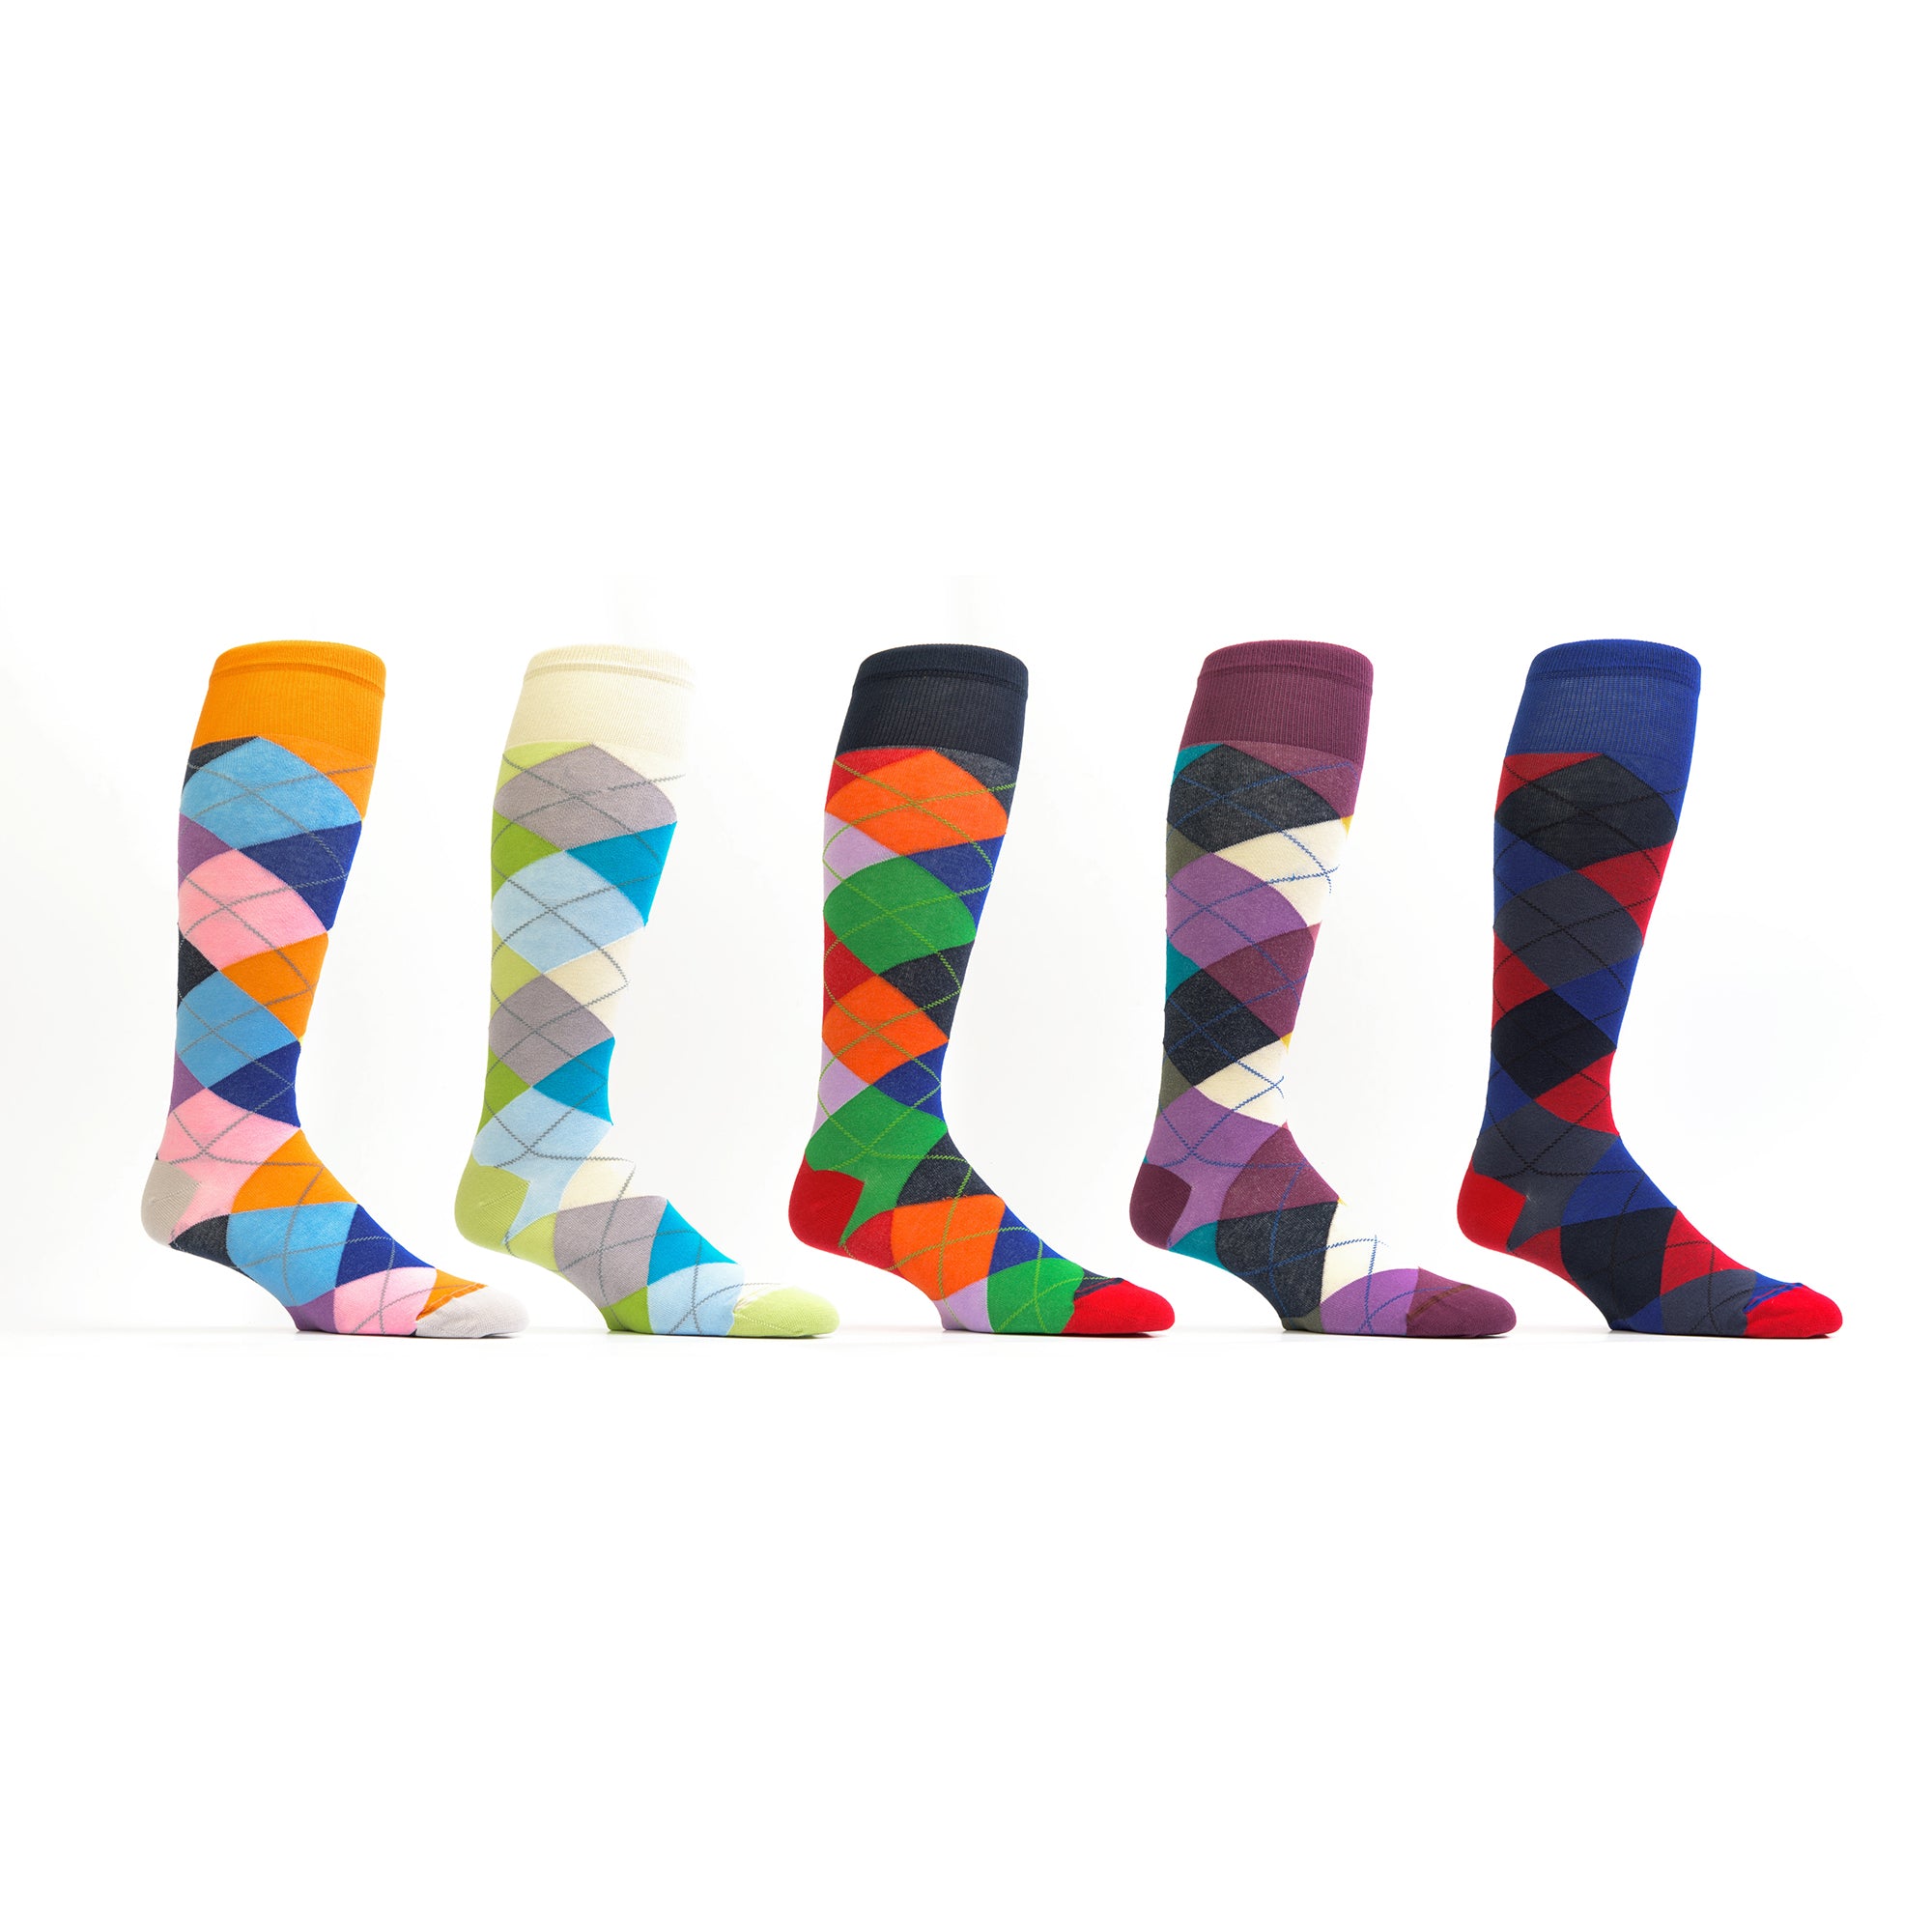 Zicci Women's 5-Pair Crazy Argyle Knee High Socks